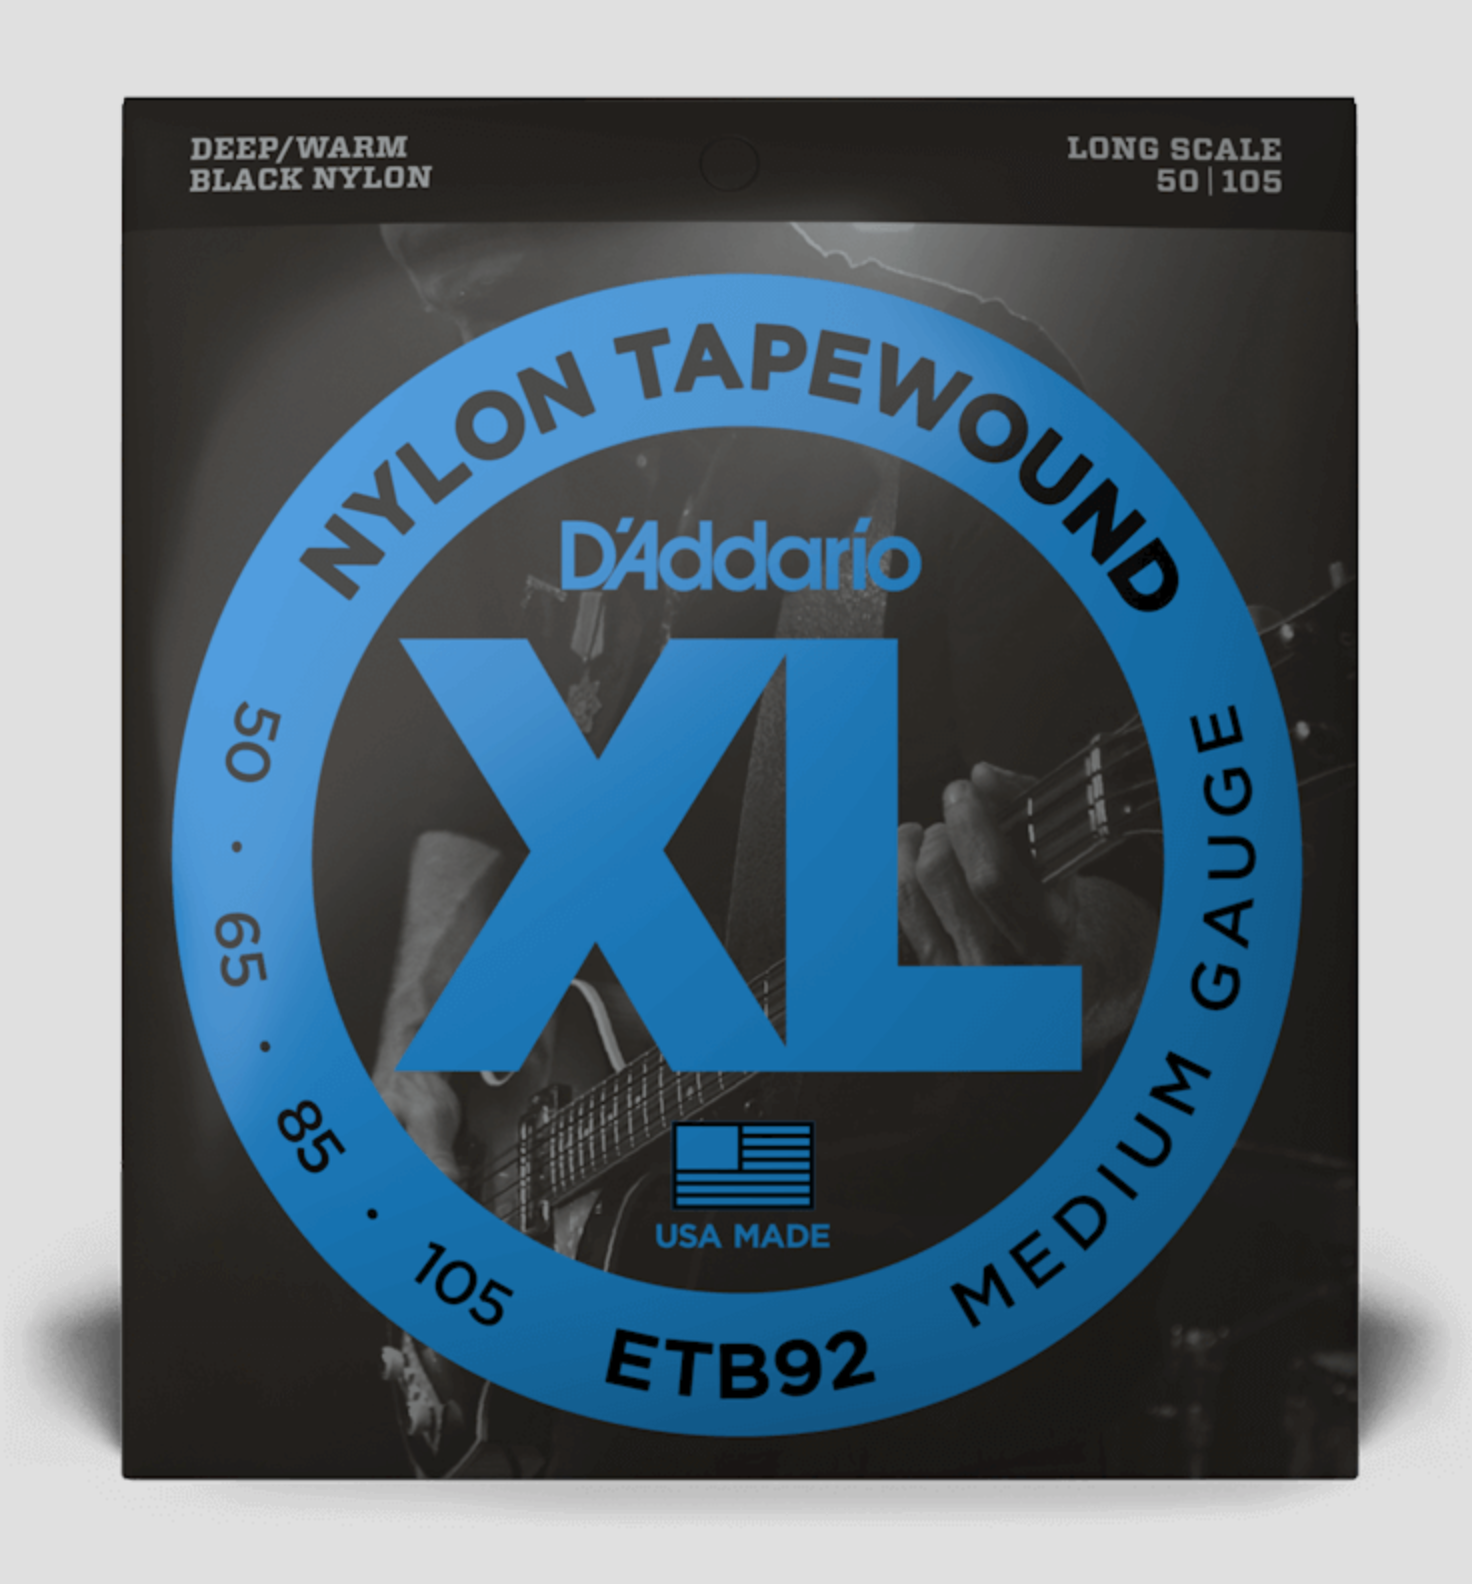 D'Addario XL 50-105 Nylon TapeWound Bass Strings